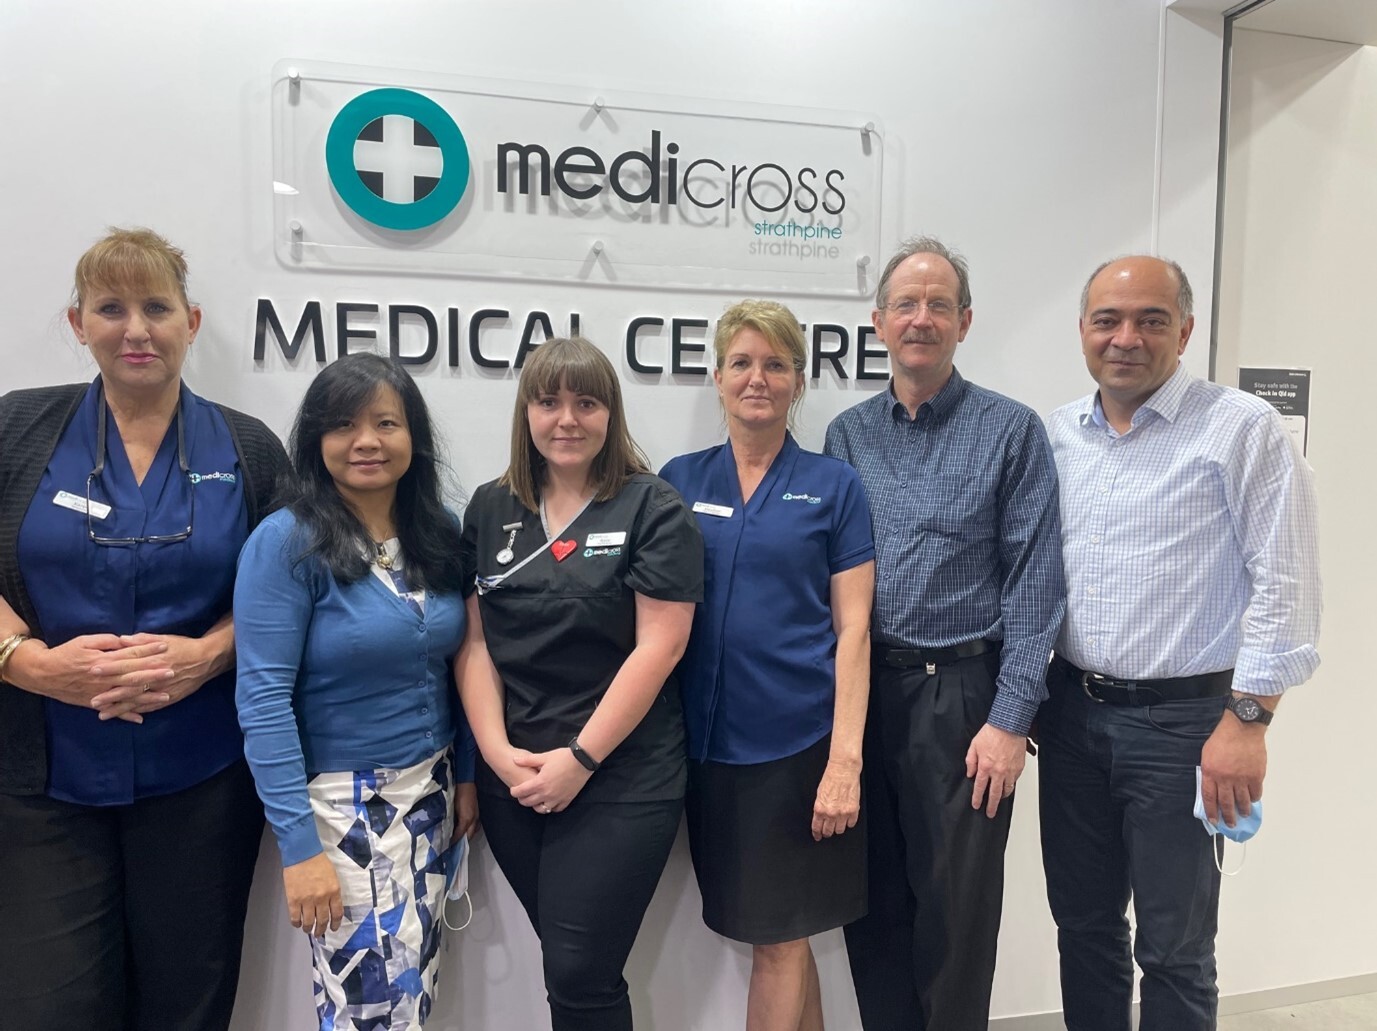 Medicross Strathpine team